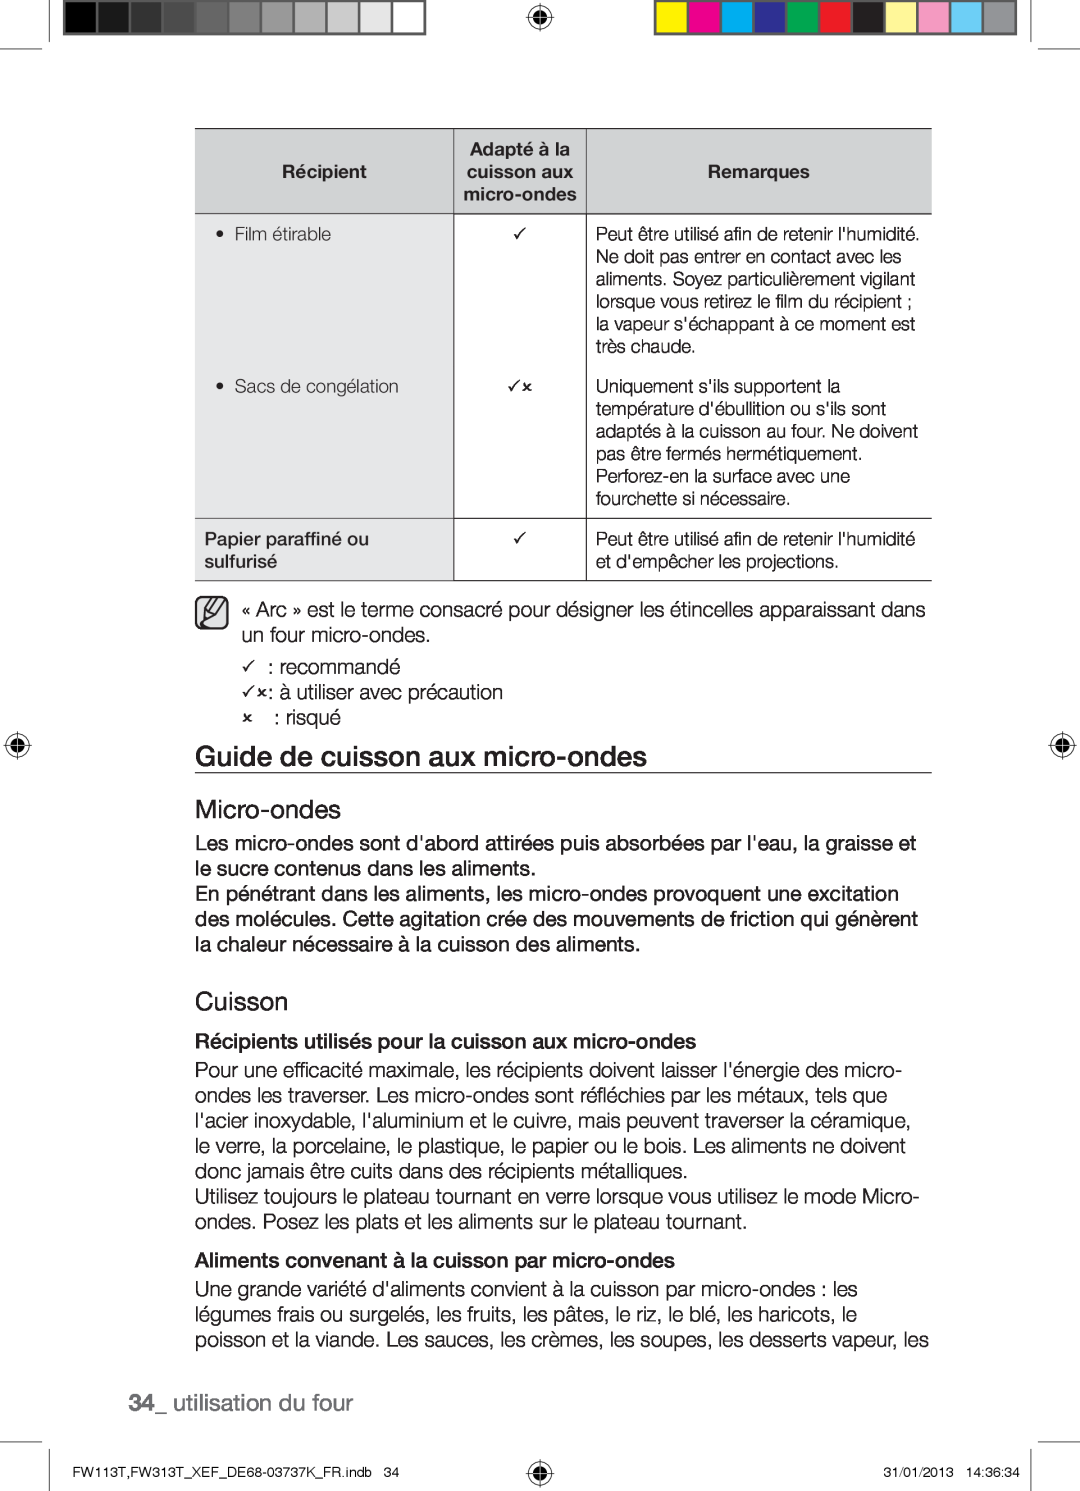 Samsung FW113T002/XEF manual Guide de cuisson aux micro-ondes, Micro-ondes, Cuisson, utilisation du four 